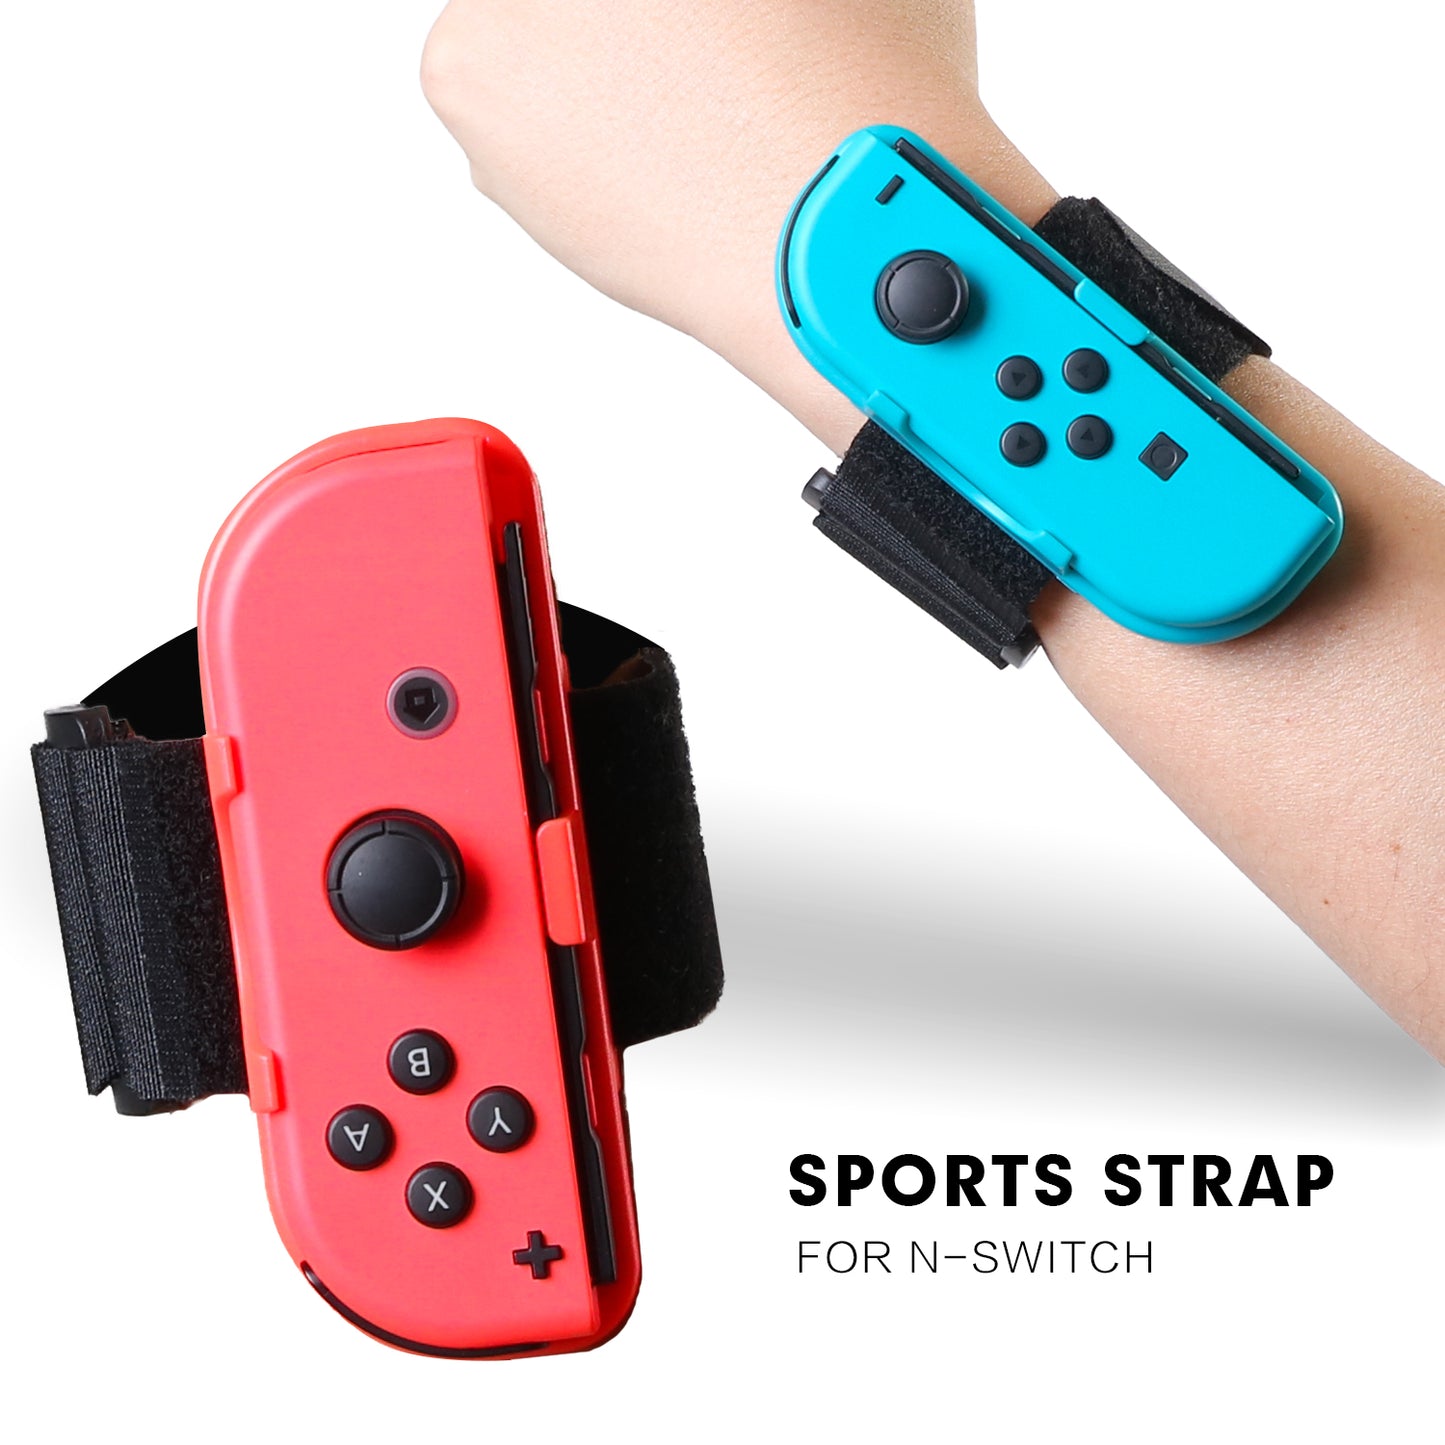 Score goals using the Leg Strap accessory in the free Nintendo